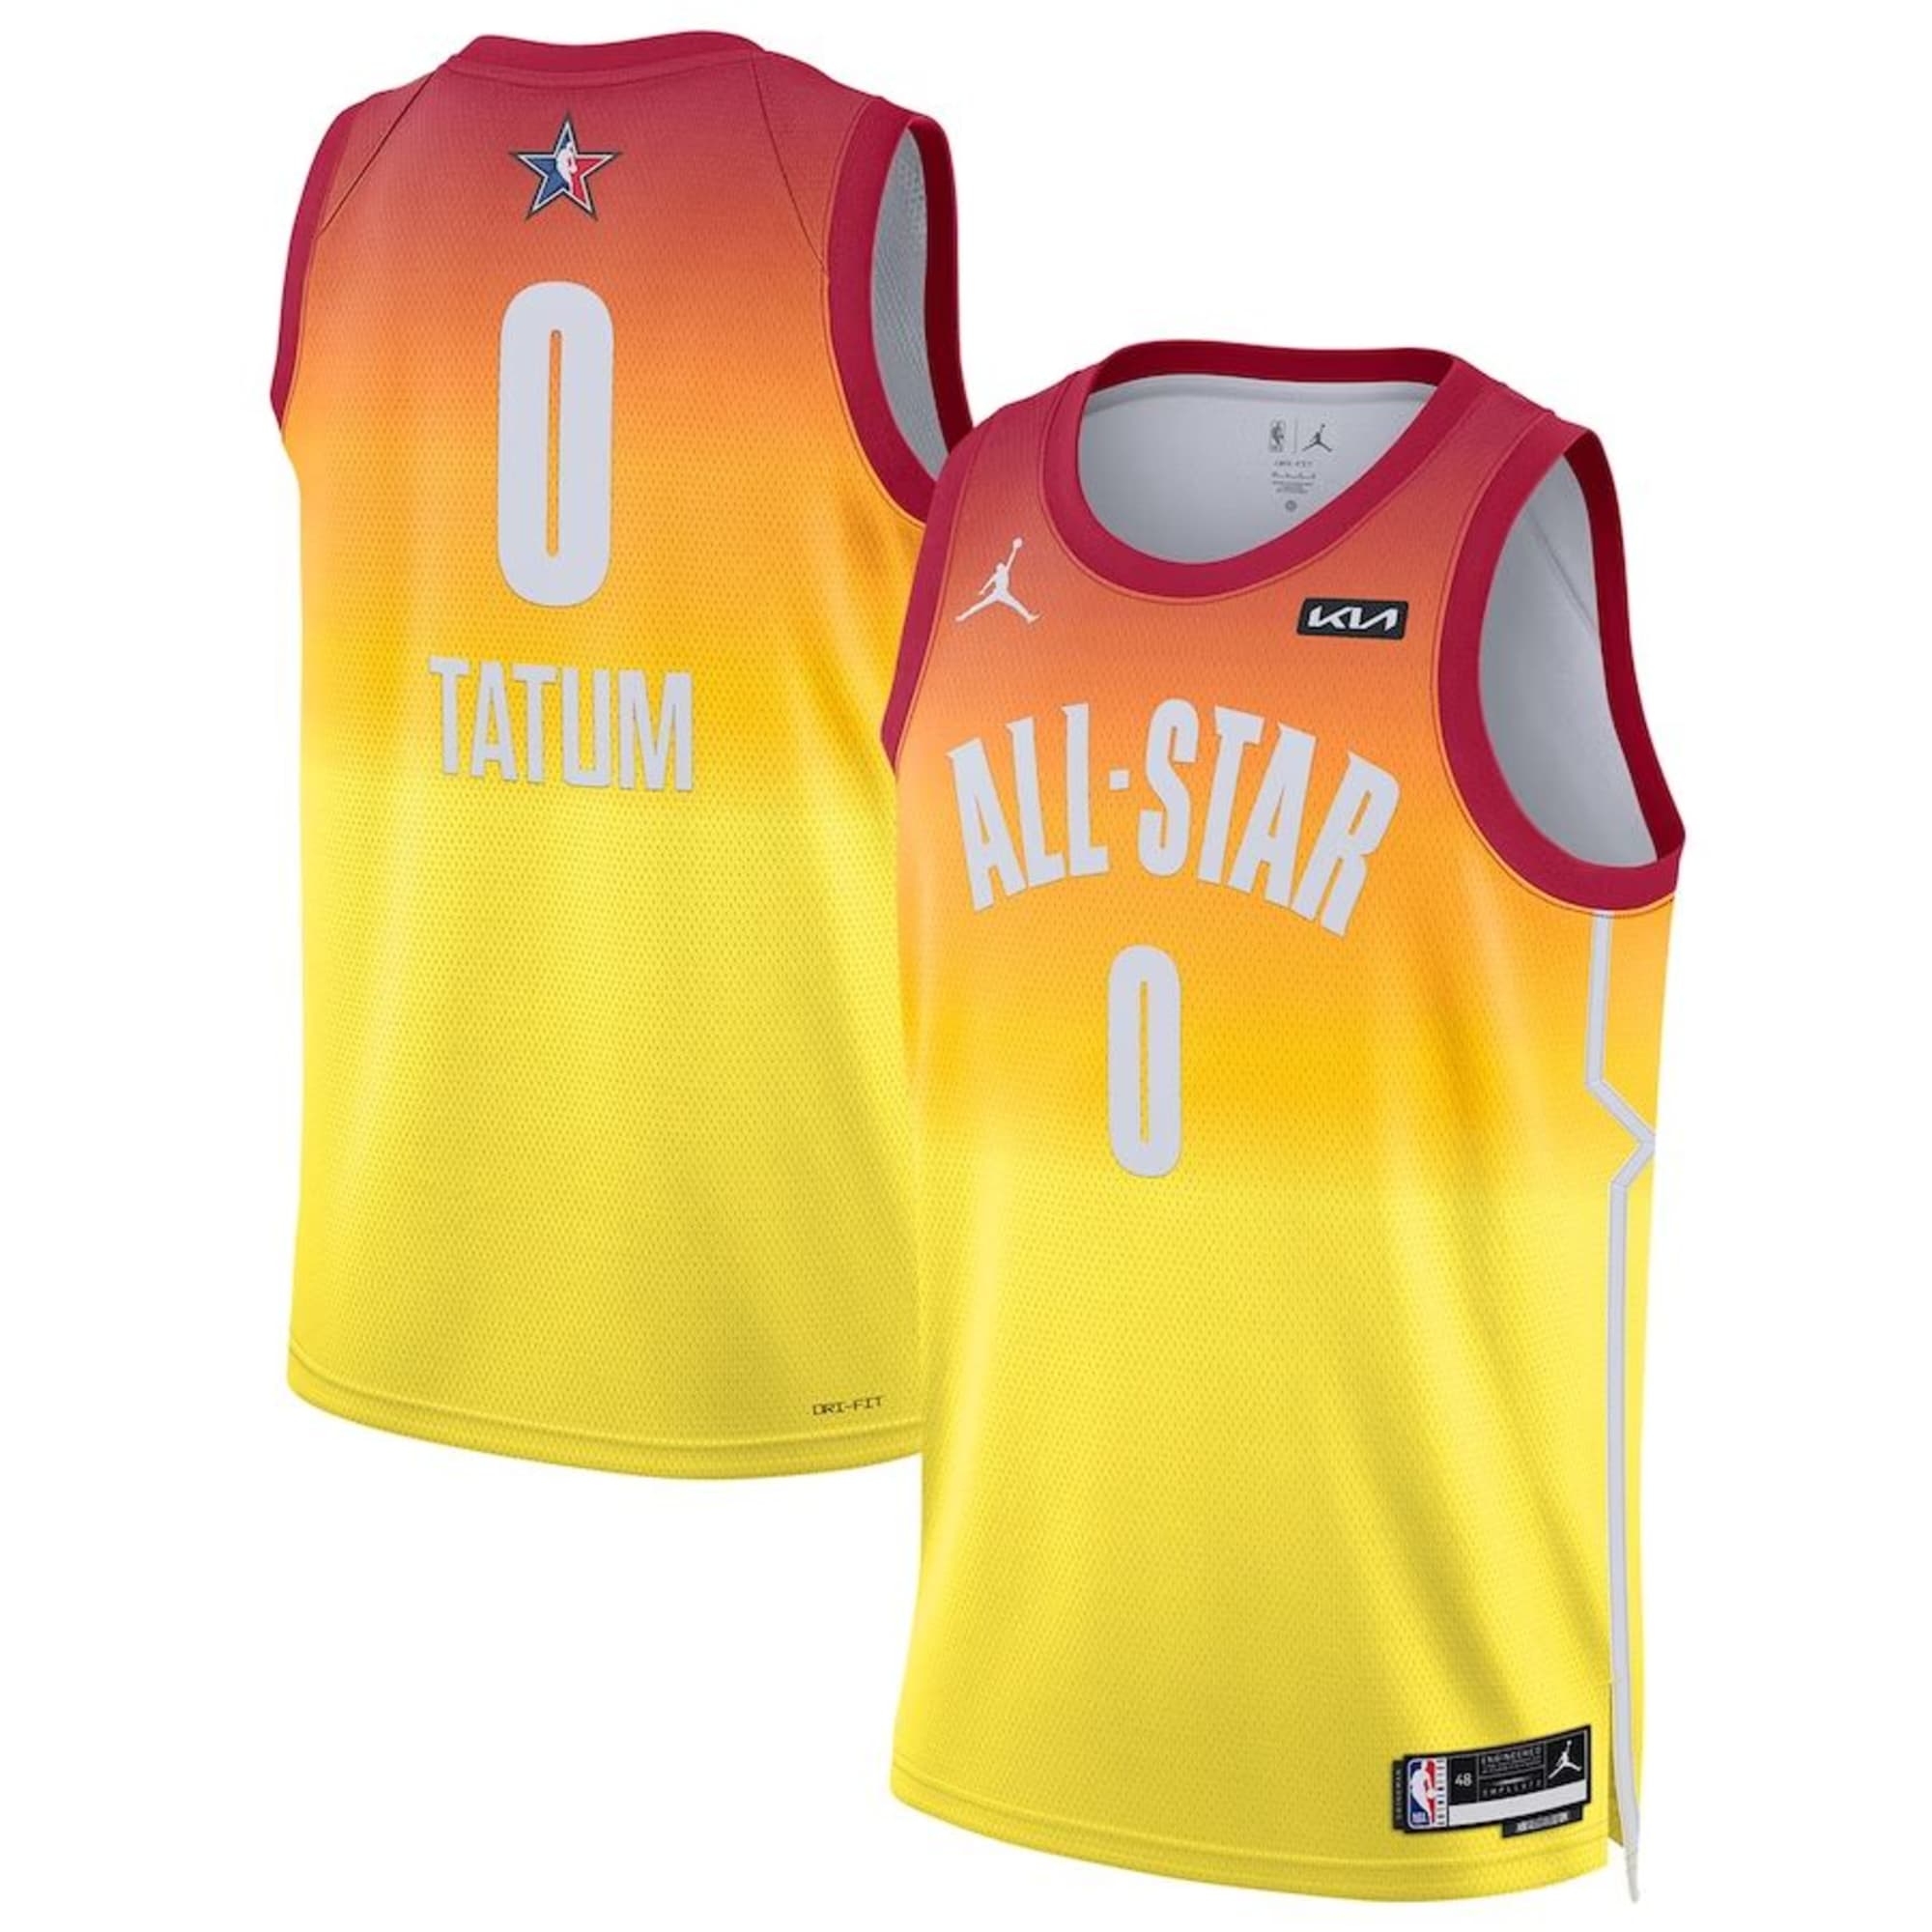 Order your 2023 Jayson Tatum AllStar merchandise today